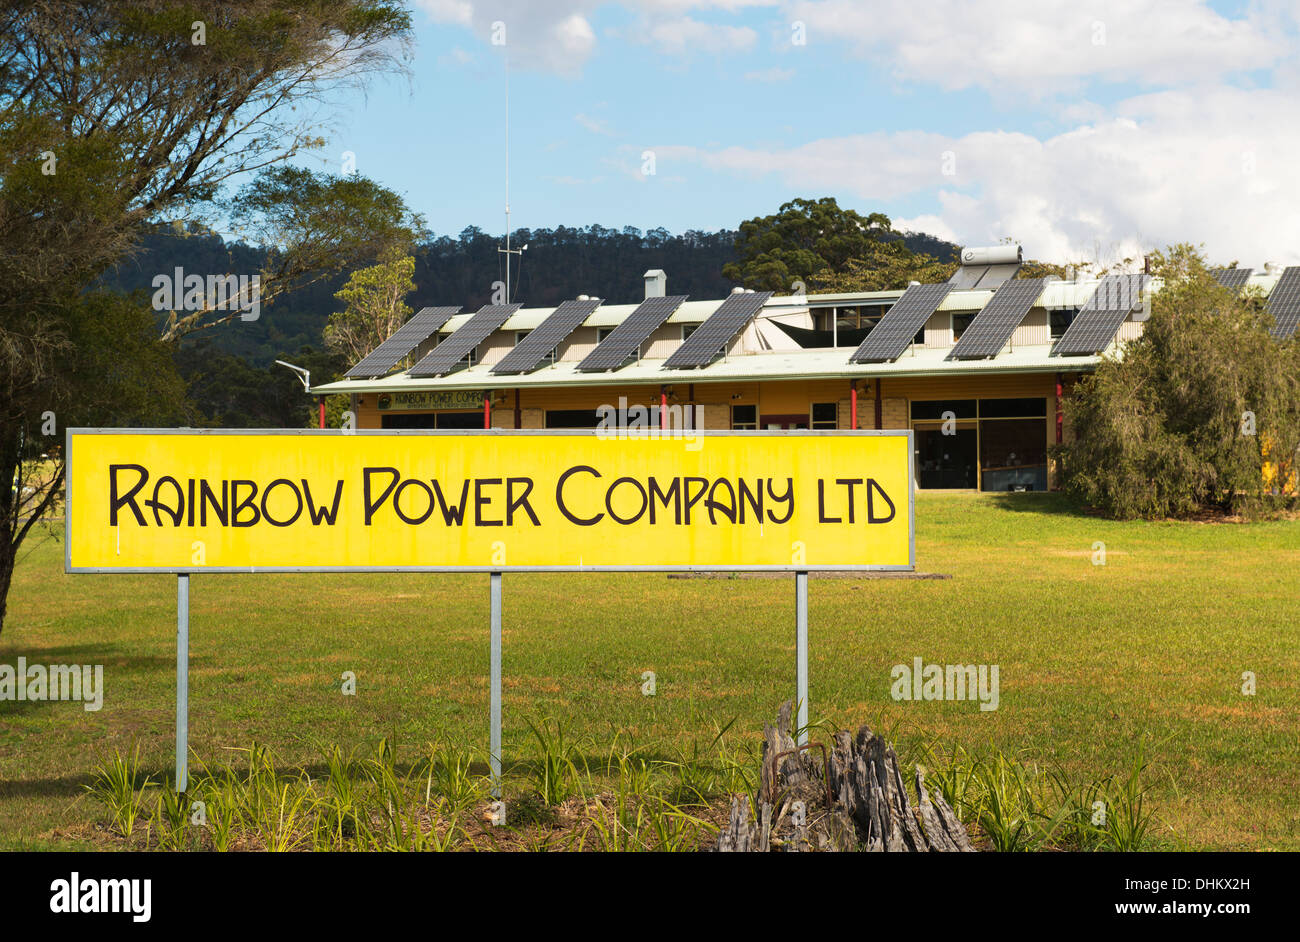 The Rainbow Power Company is a worldwide supplier of alternative energy. Stock Photo